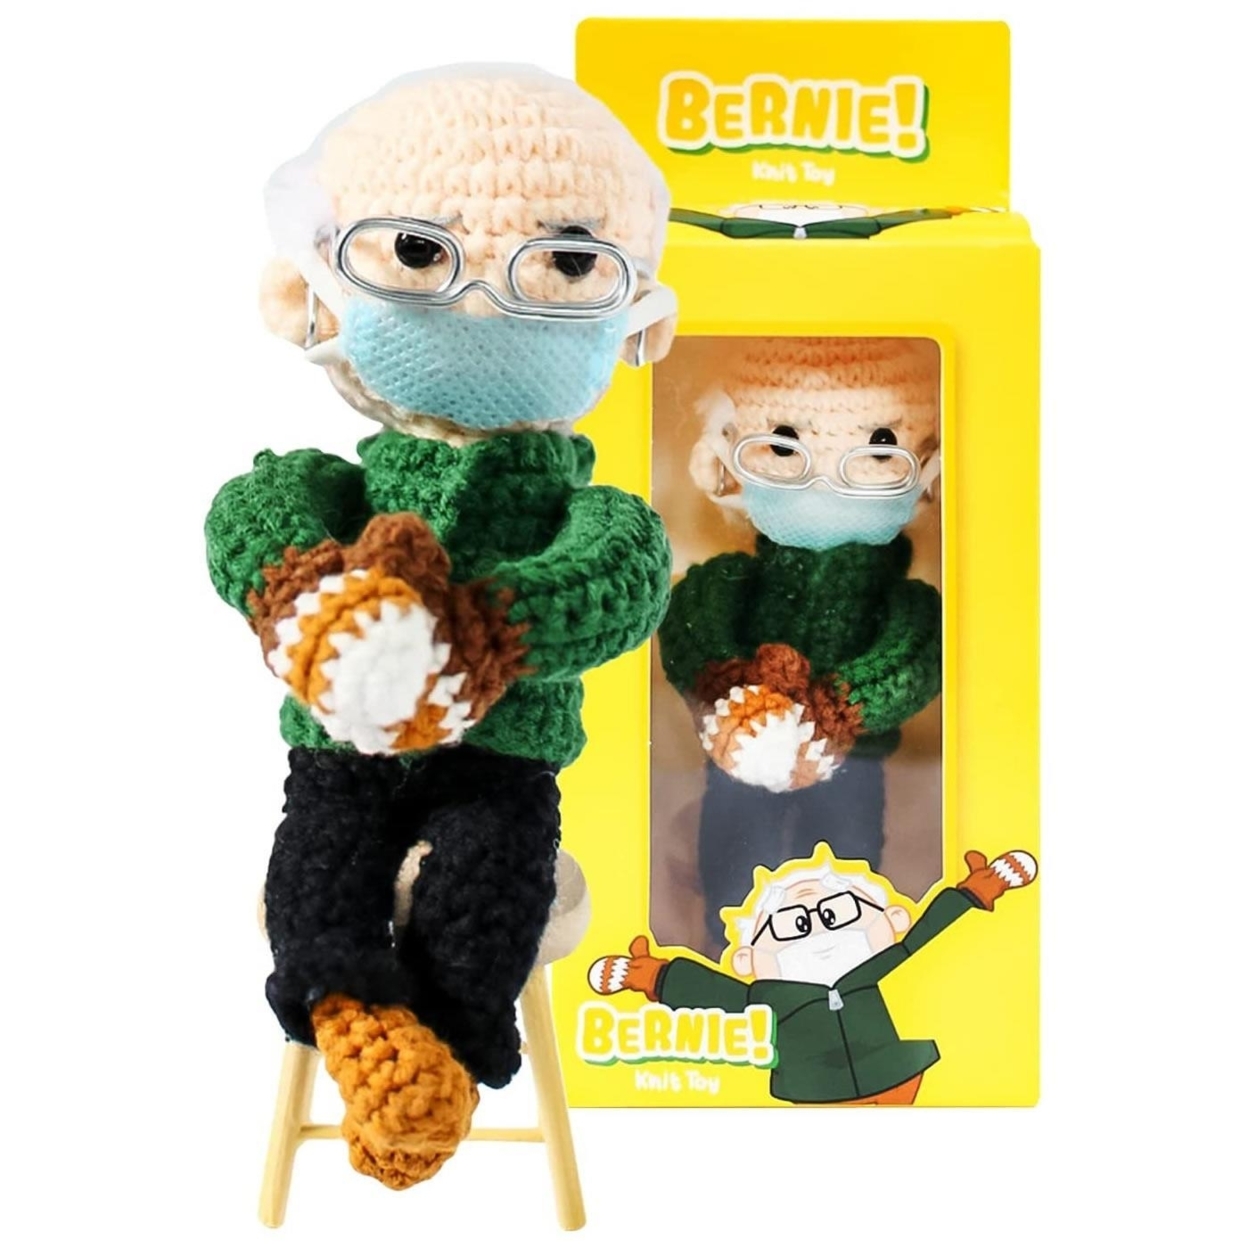 Senator Bernie Sanders Mittens Inauguration Doll Ornament Crochet Democrat Socialist Mighty Mojo